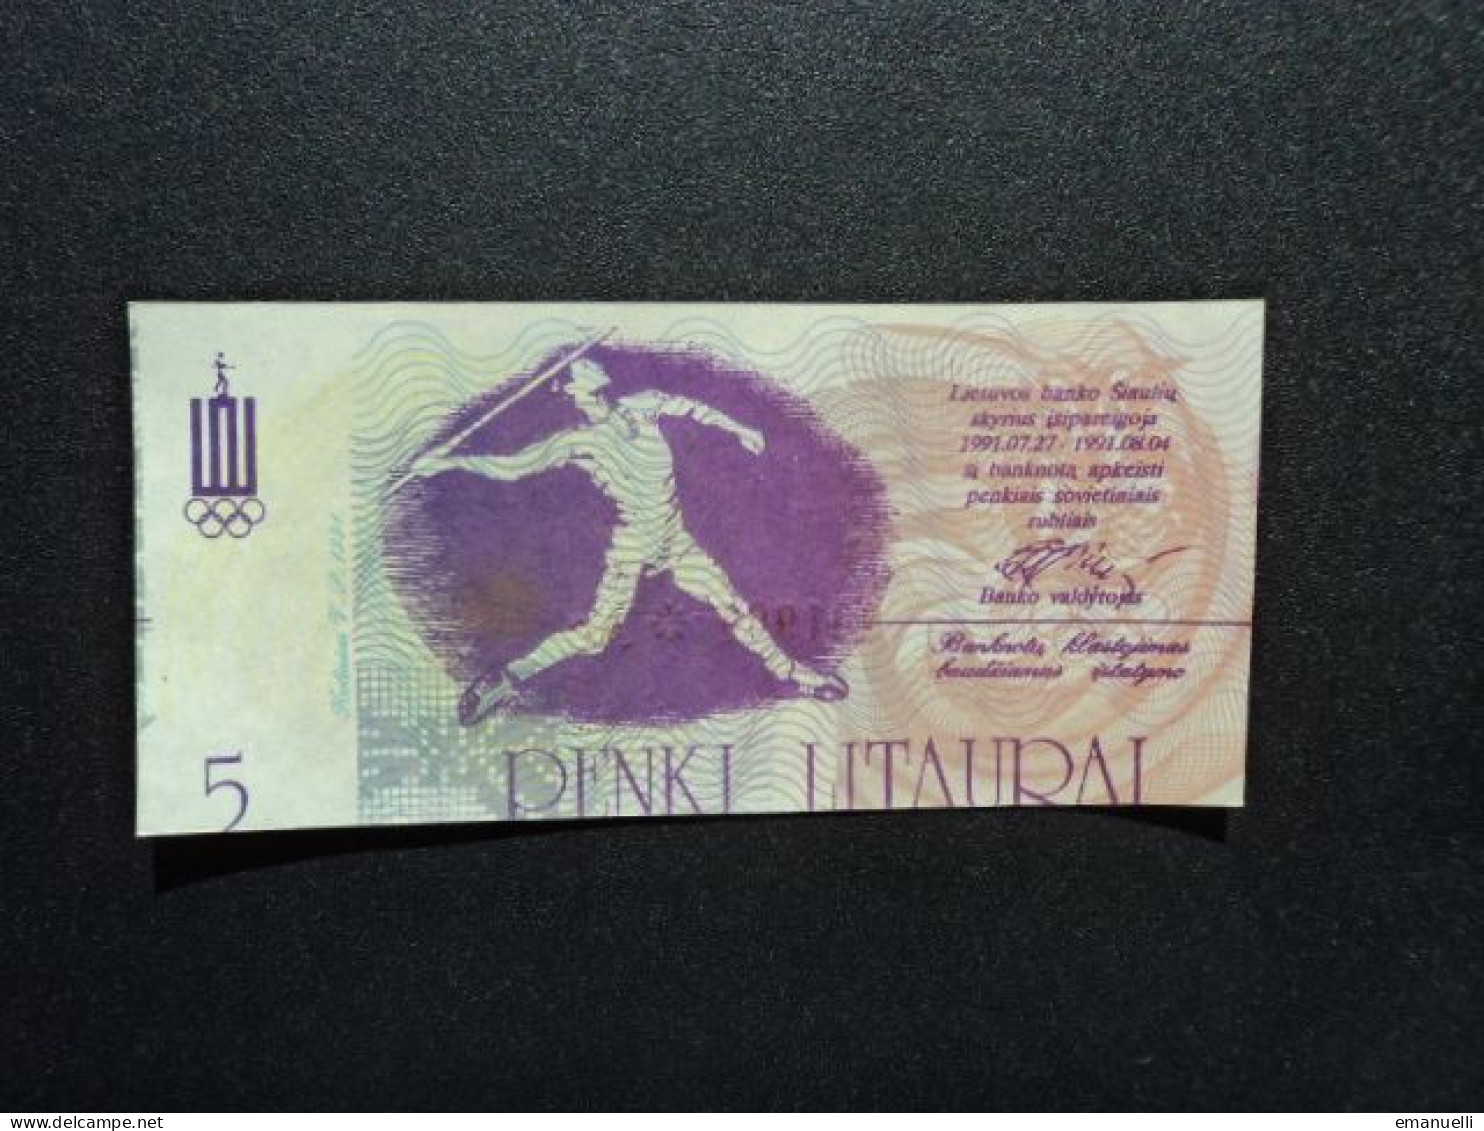 LITHUANIE * : LIETUVOS BANKO SIAULUU SKRYRIAUS BANKNOTAS : 5 LITAURAL   27-4-1991   SPL - Lituanie